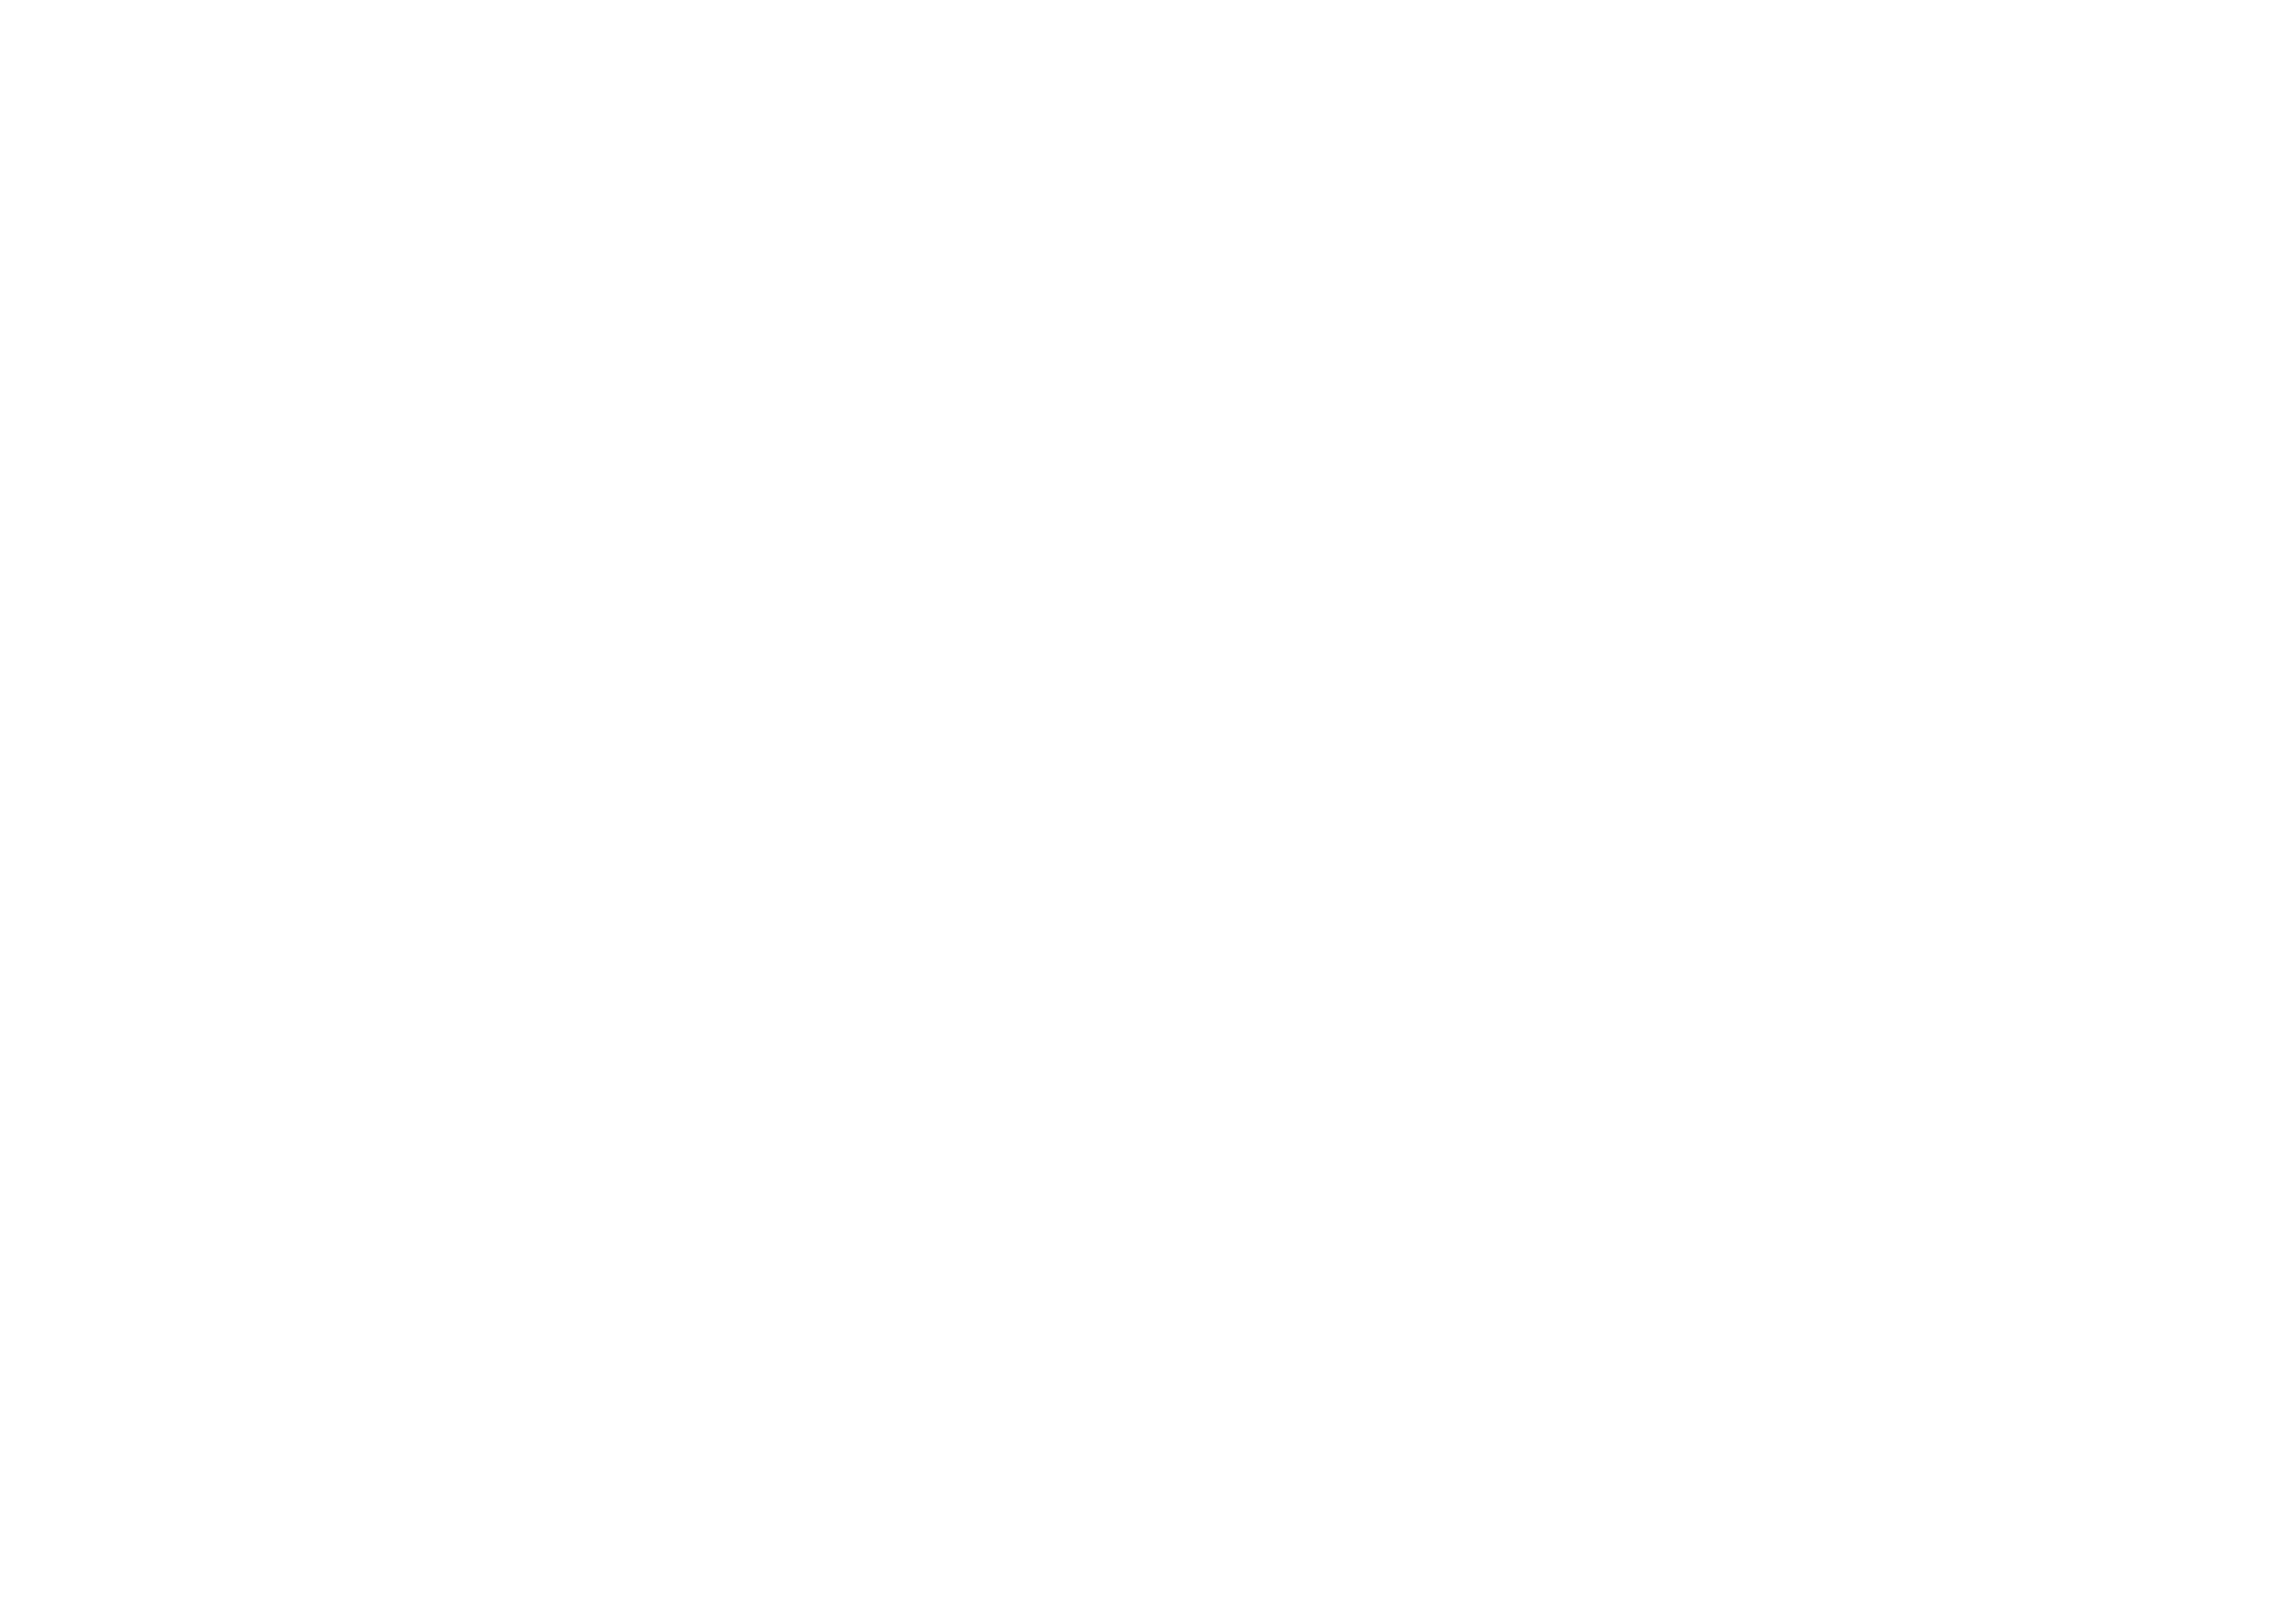 logo Hexachip blanc sur fond vert